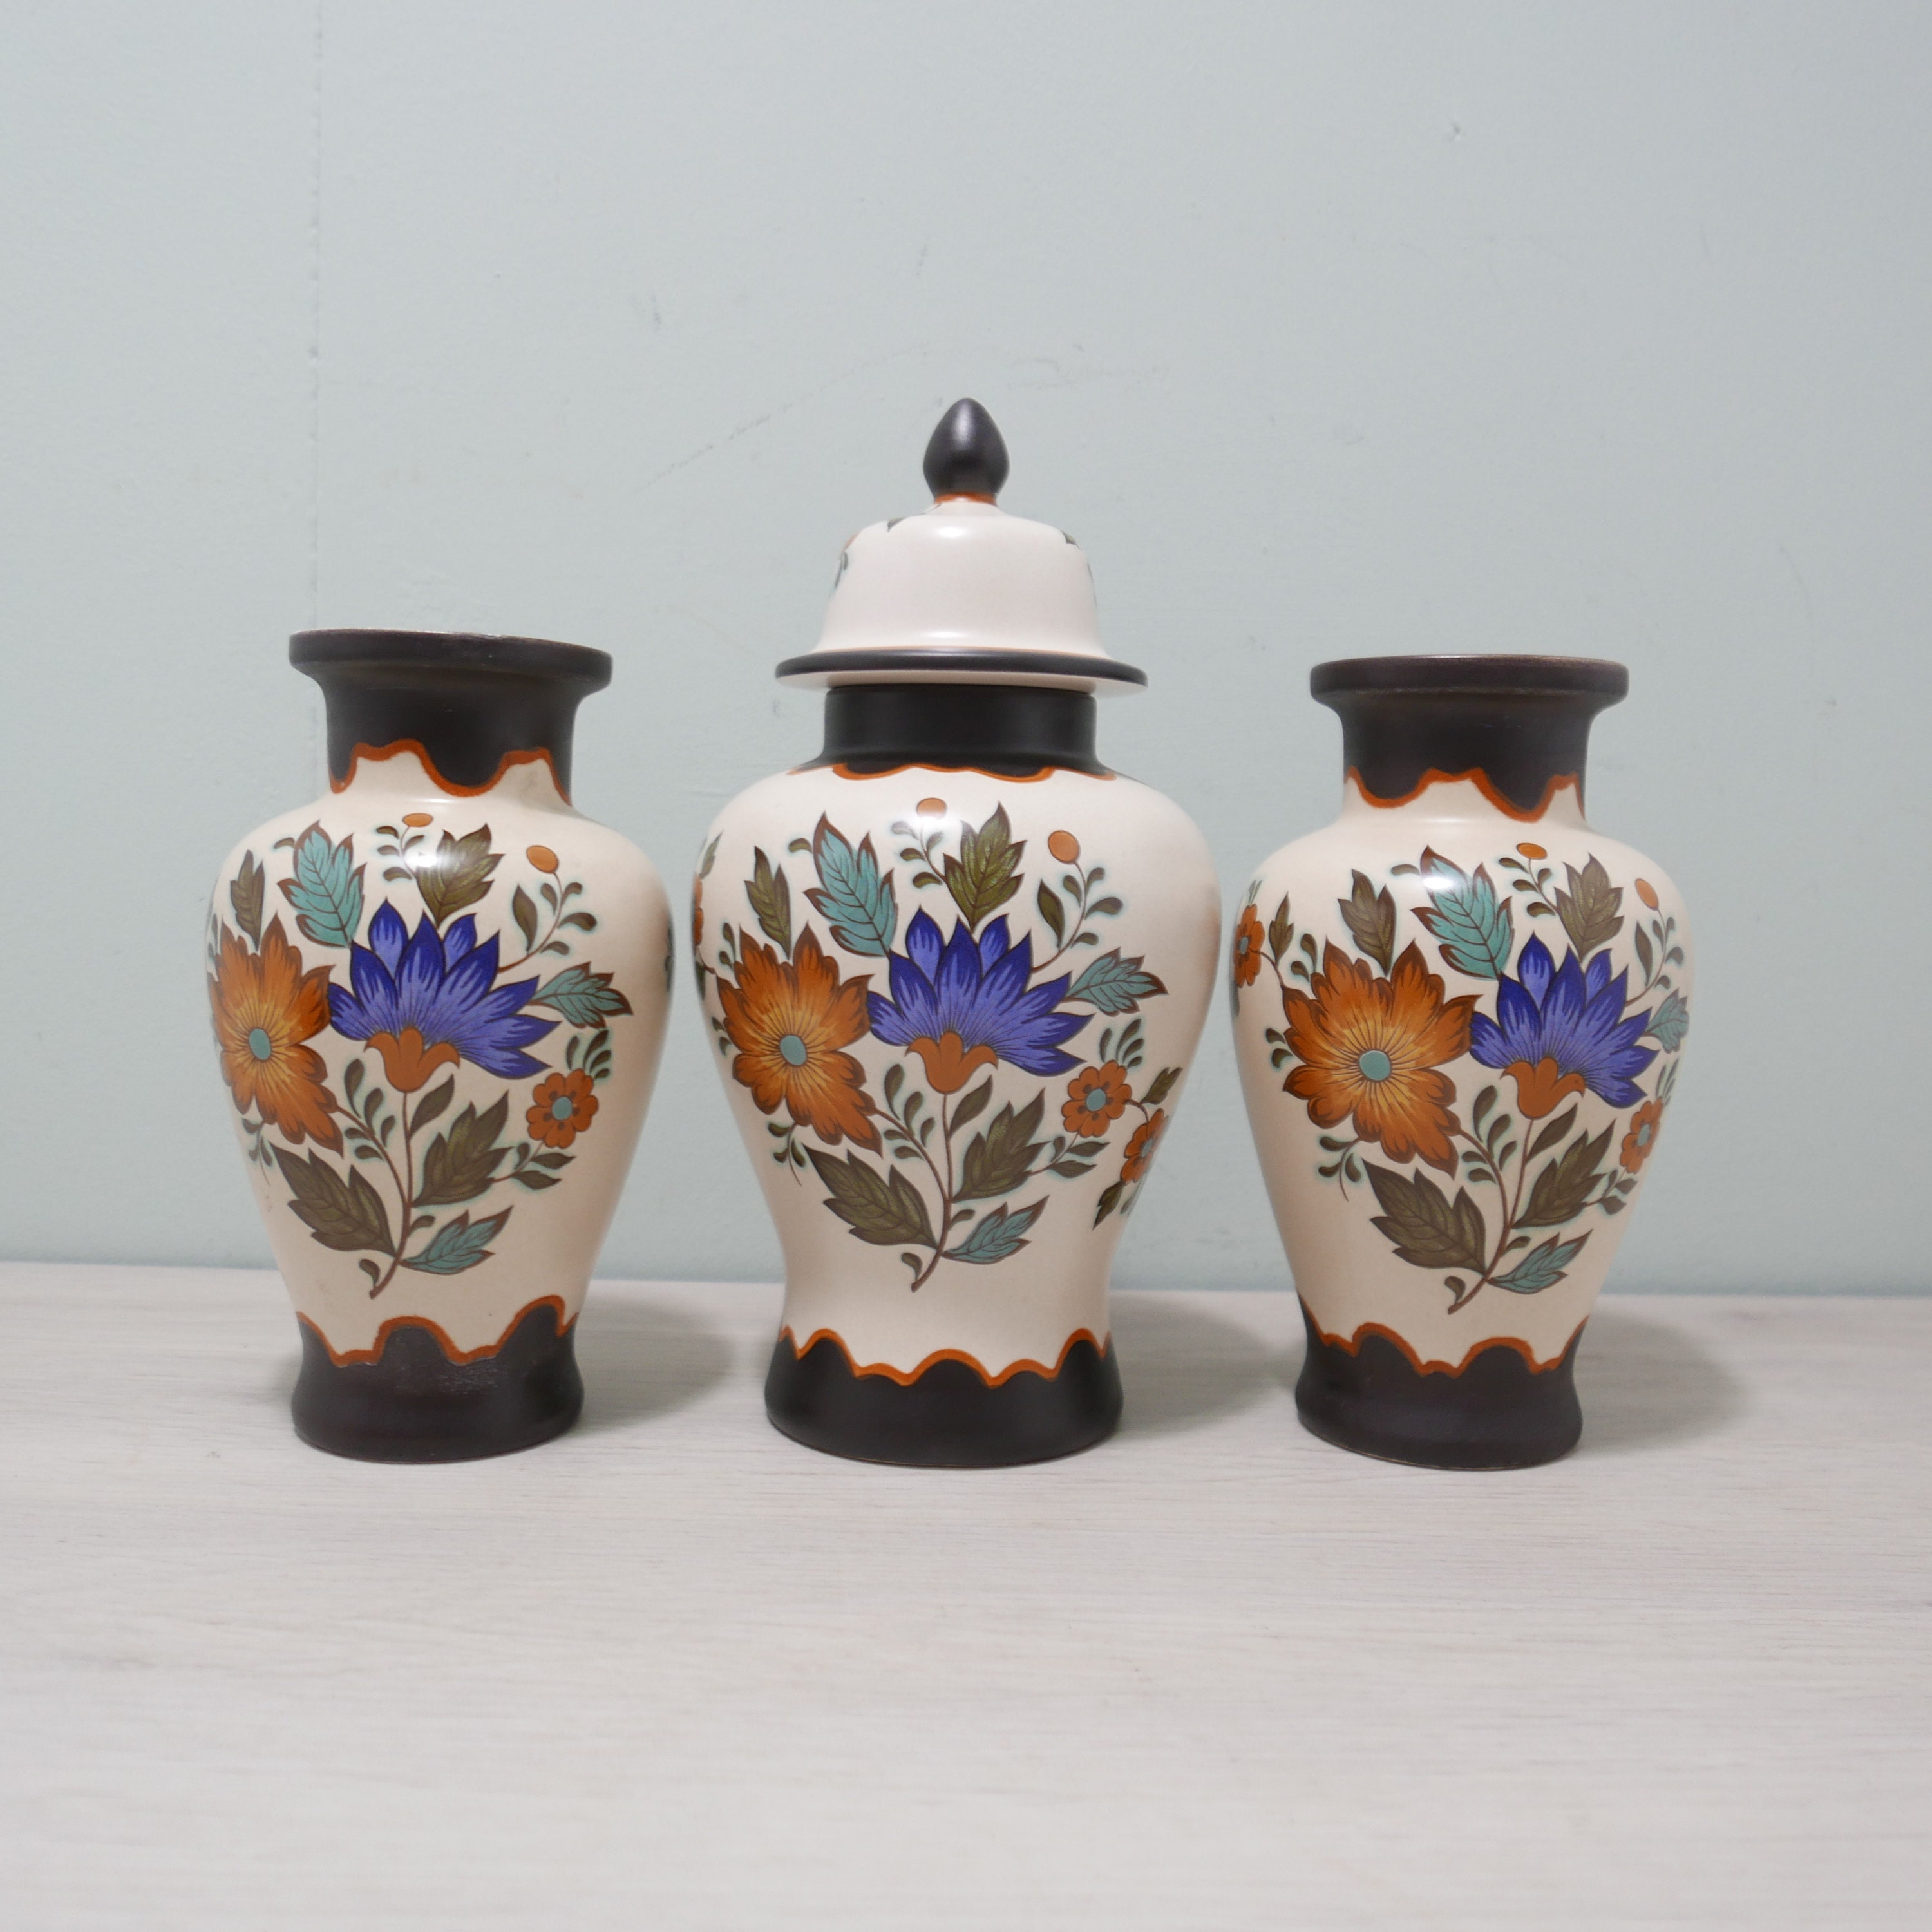 seinpaal Staat lekken Gouda Plateel Holland Set of 3 Vases the Netherlands - Etsy